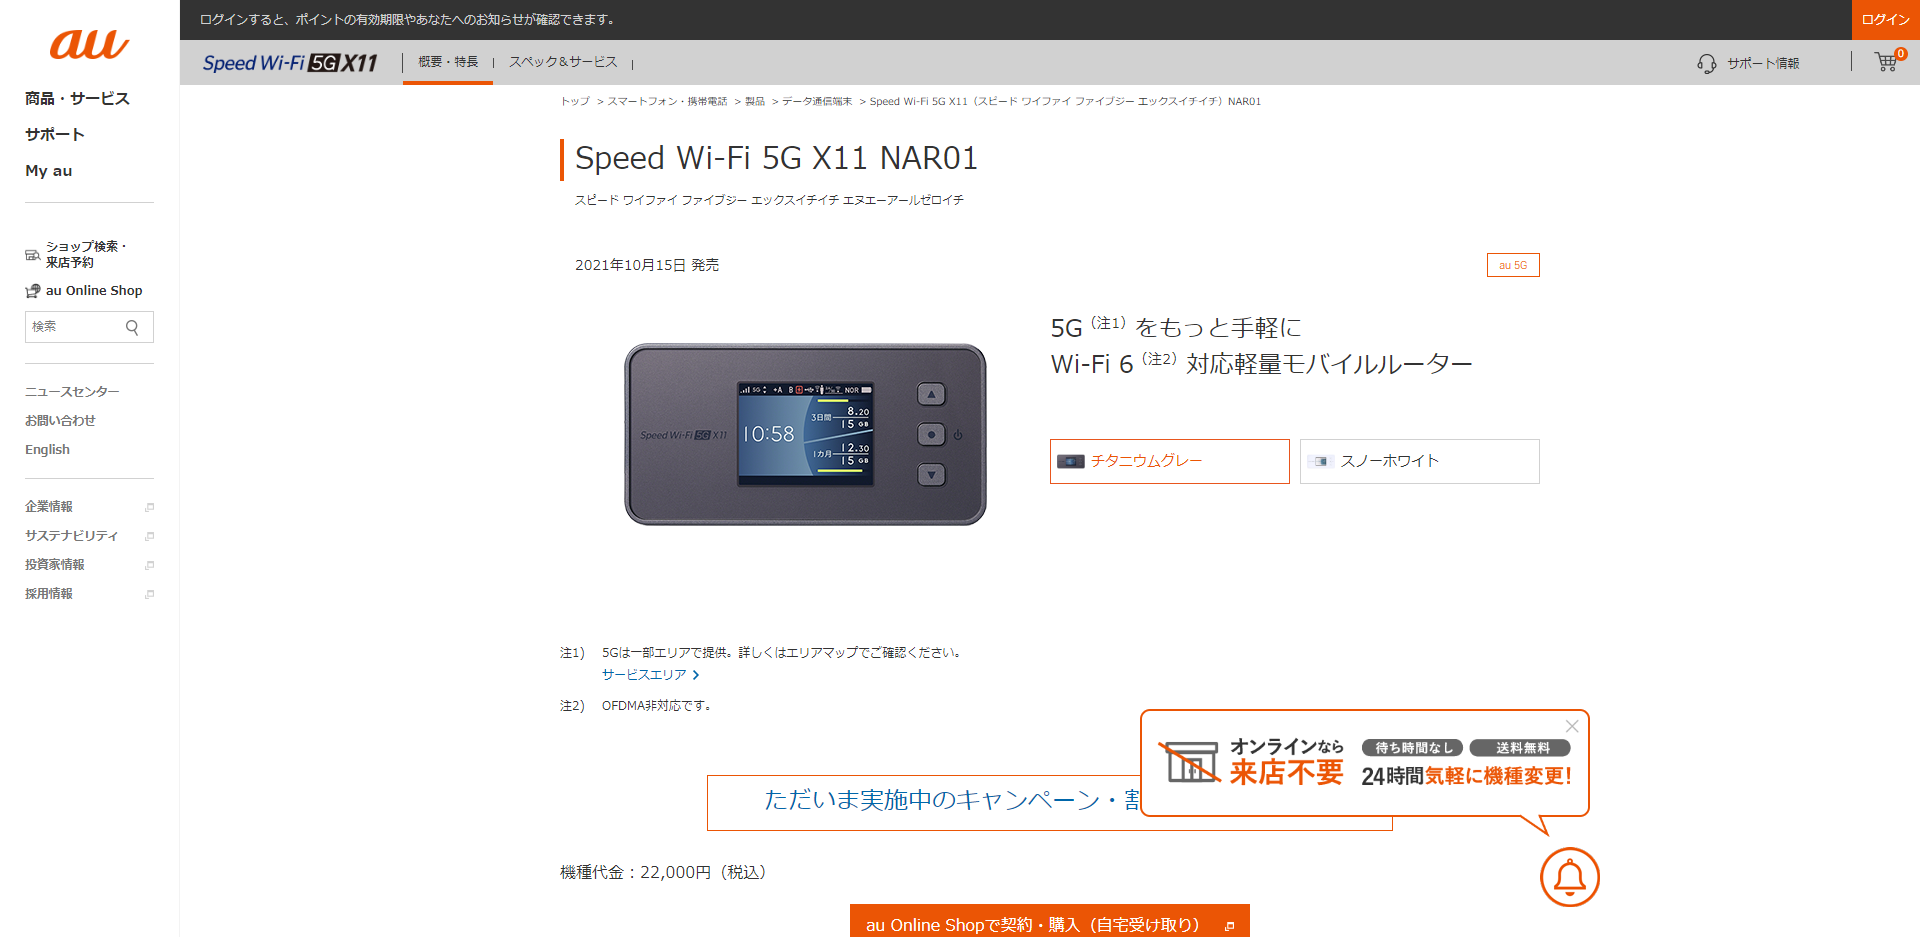 Speed Wi-Fi 5G X11 NAR01